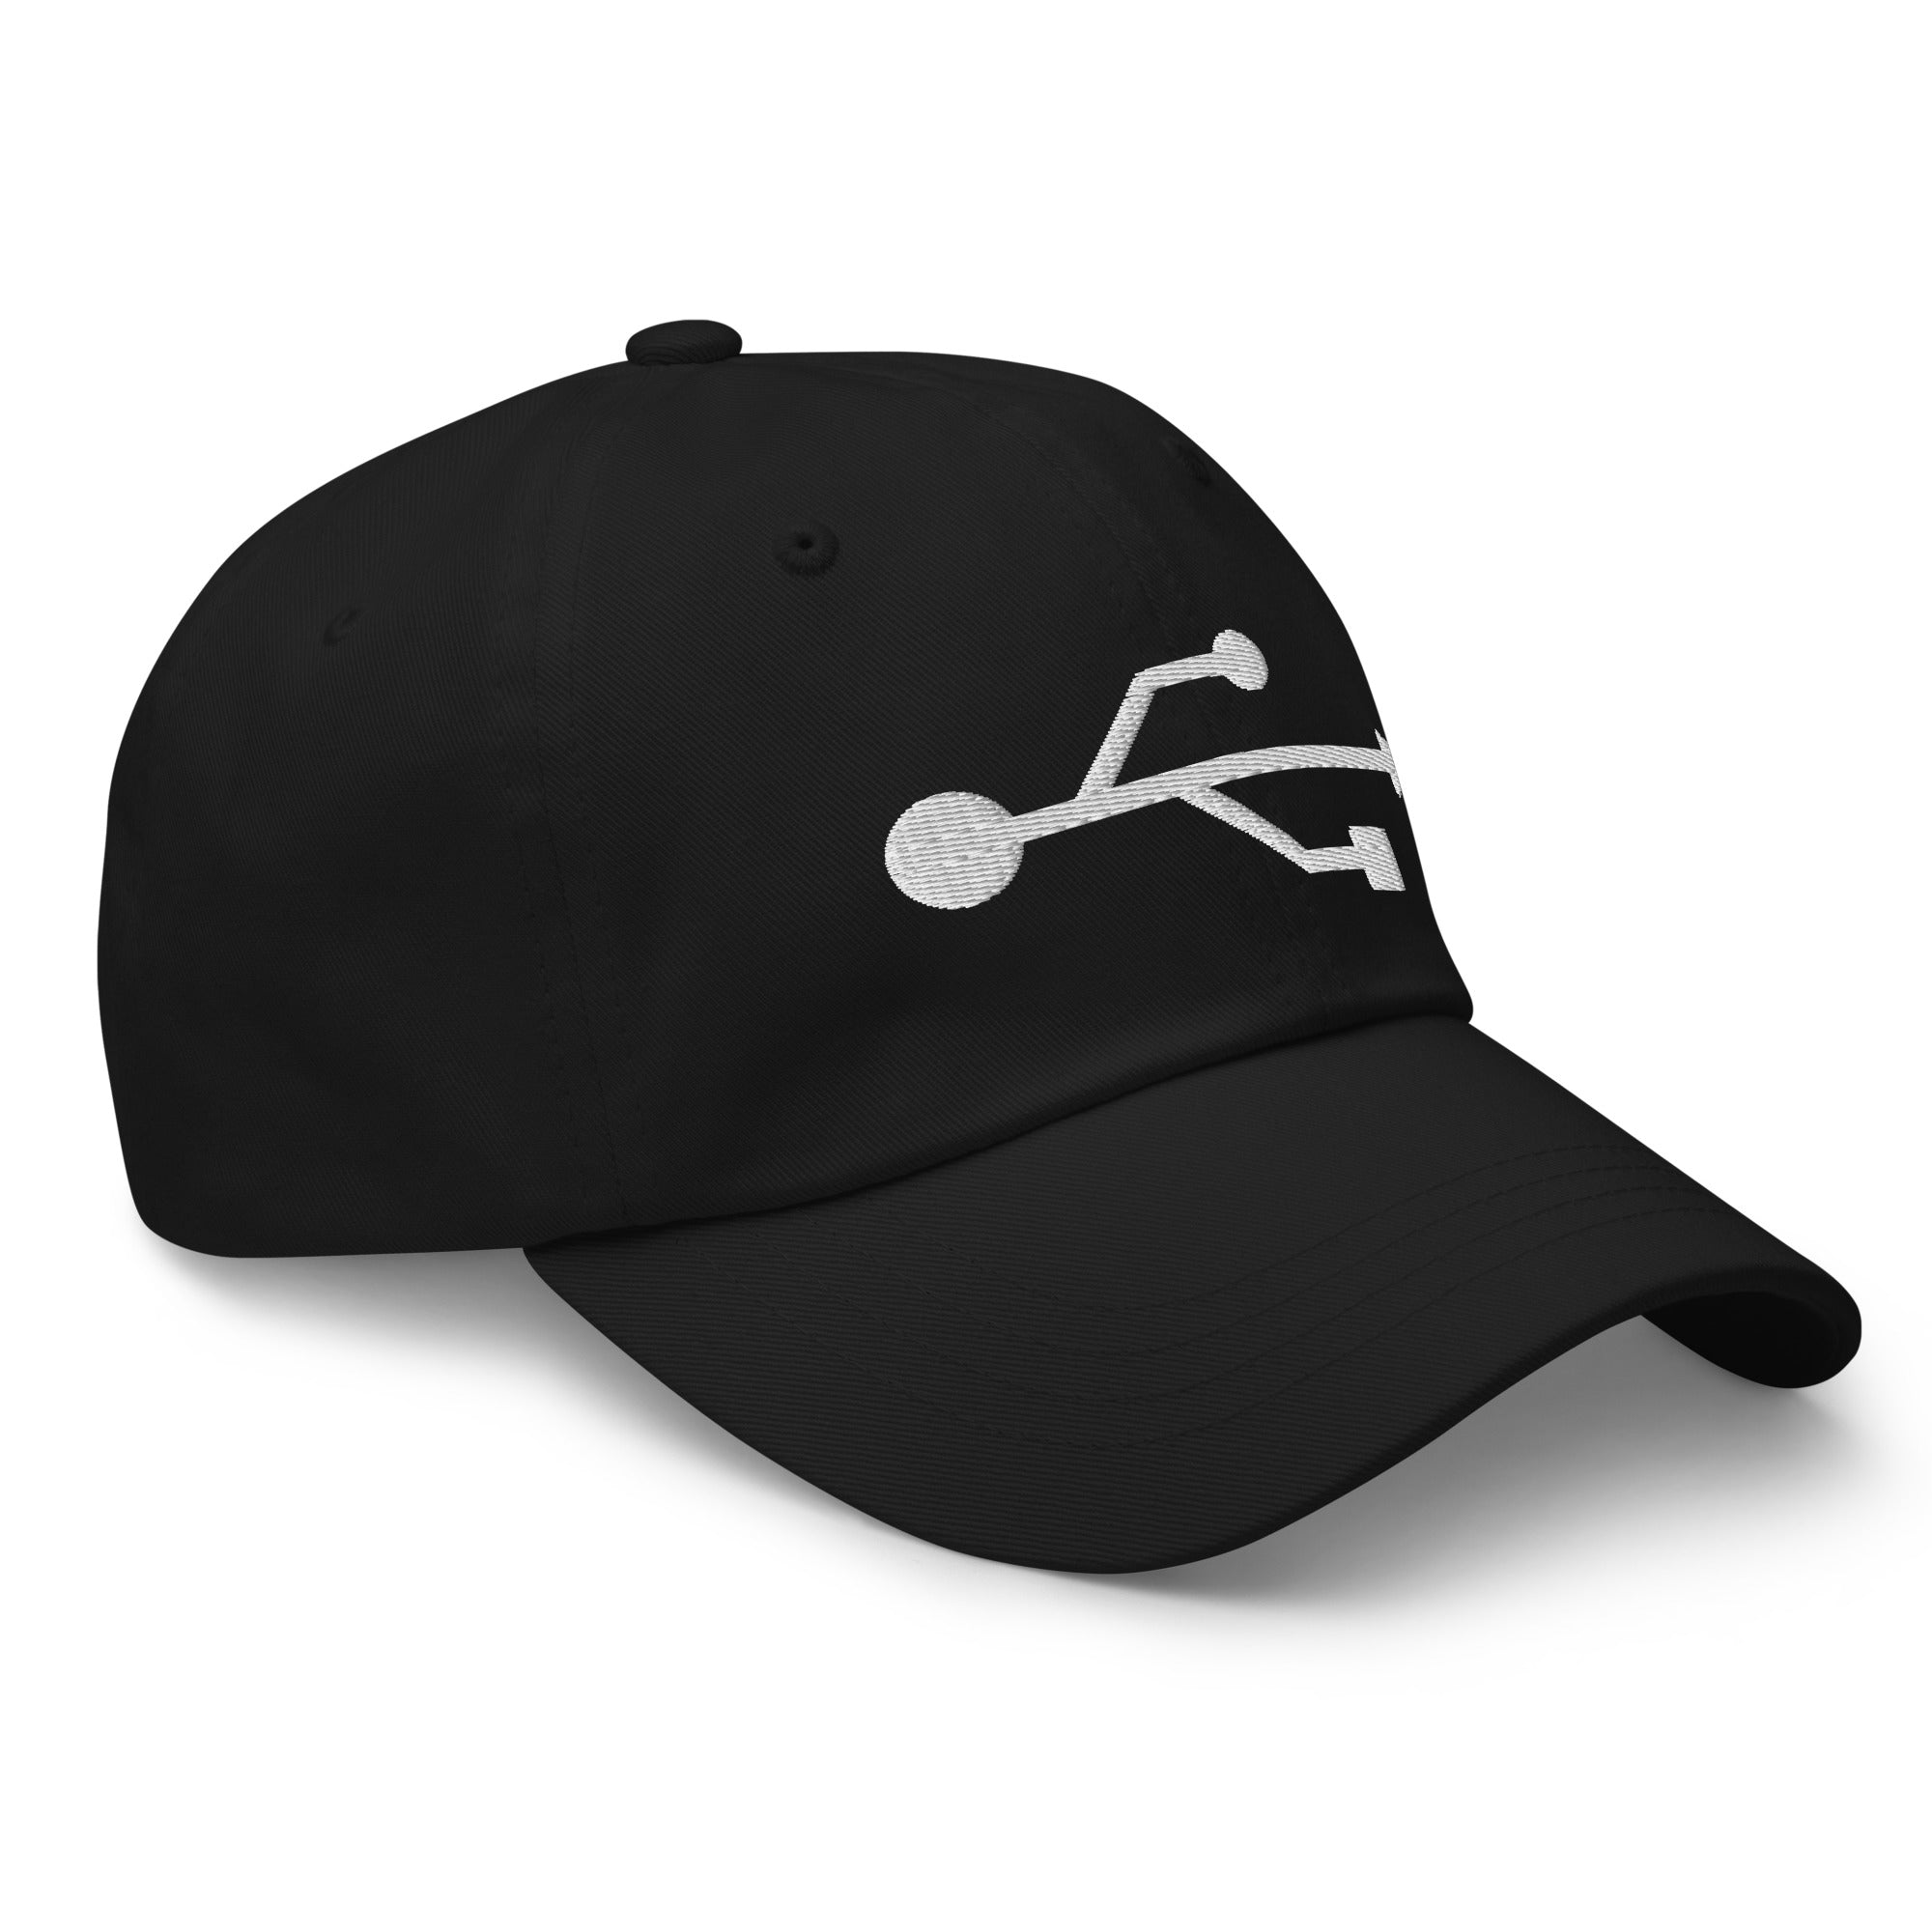 USB Symbol Embroidered Baseball Cap Universal Serial Bus Dad hat - Edge of Life Designs